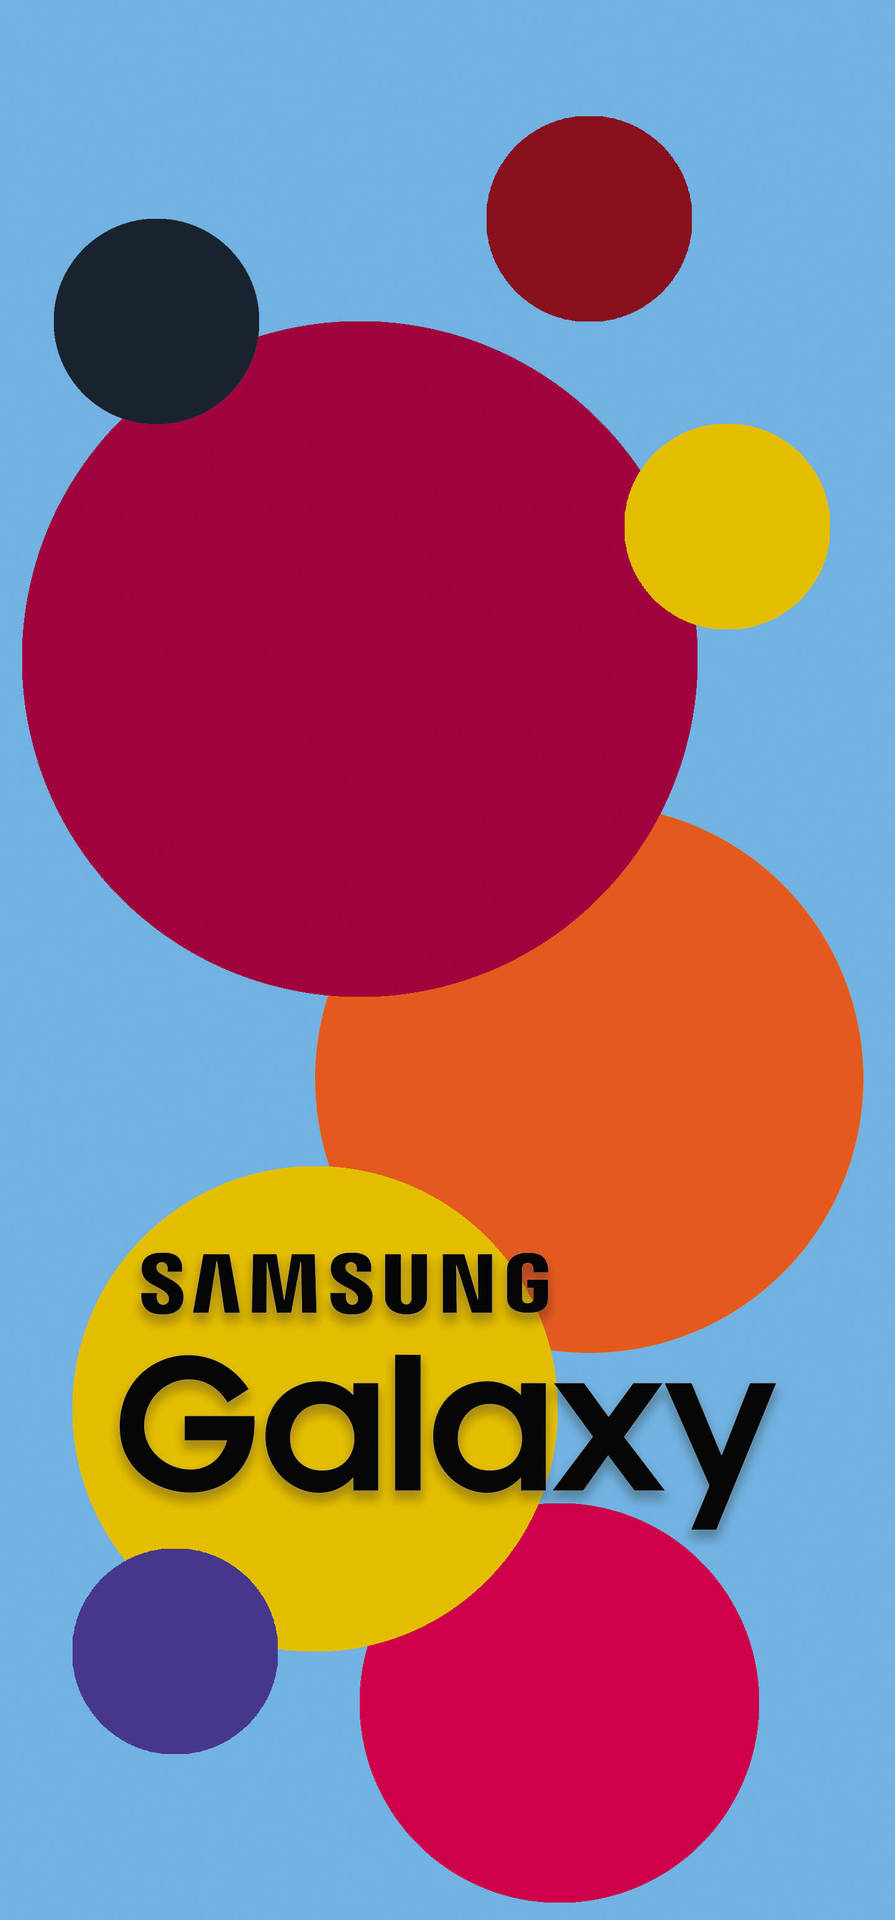 Samsung Galaxy Colorful Circles Background